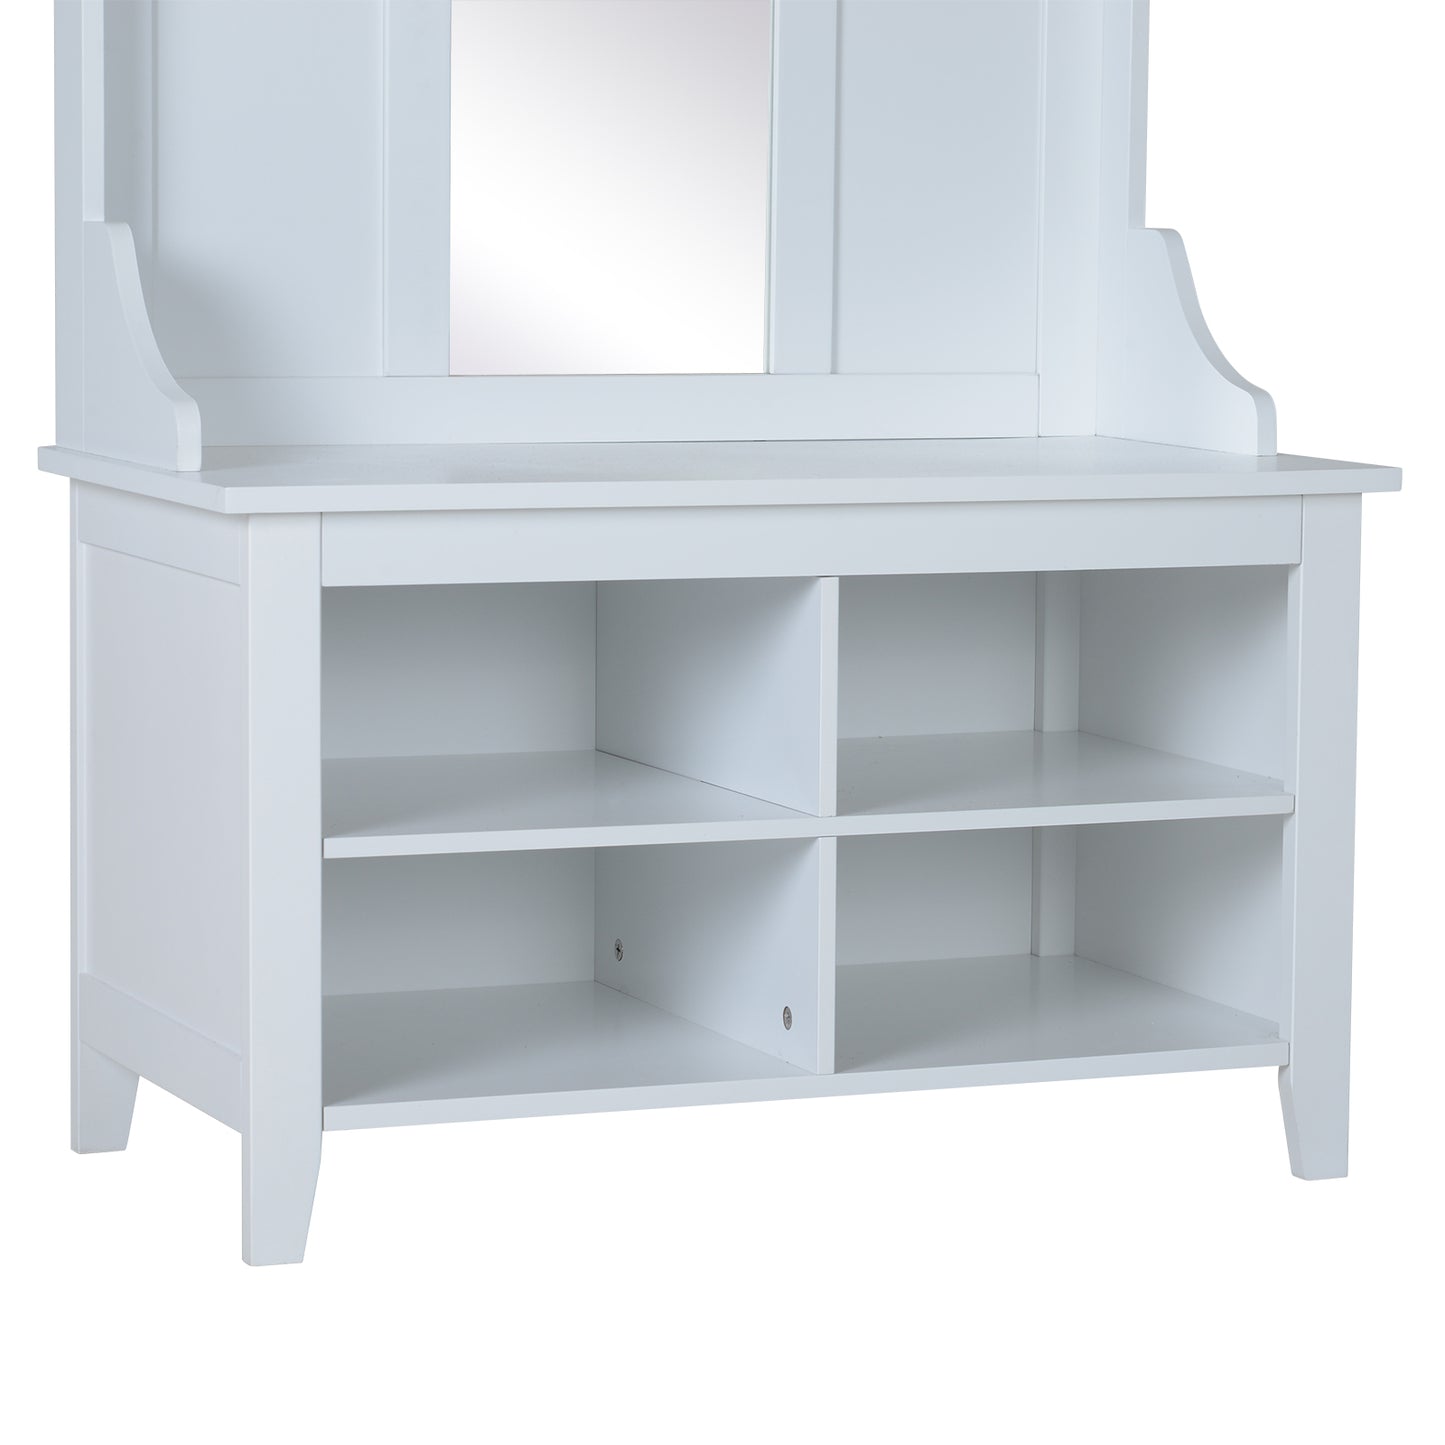 HOMCOM Hallway Mirror Cabinet W/4 Hooks, 80Lx40Wx170H cm-White